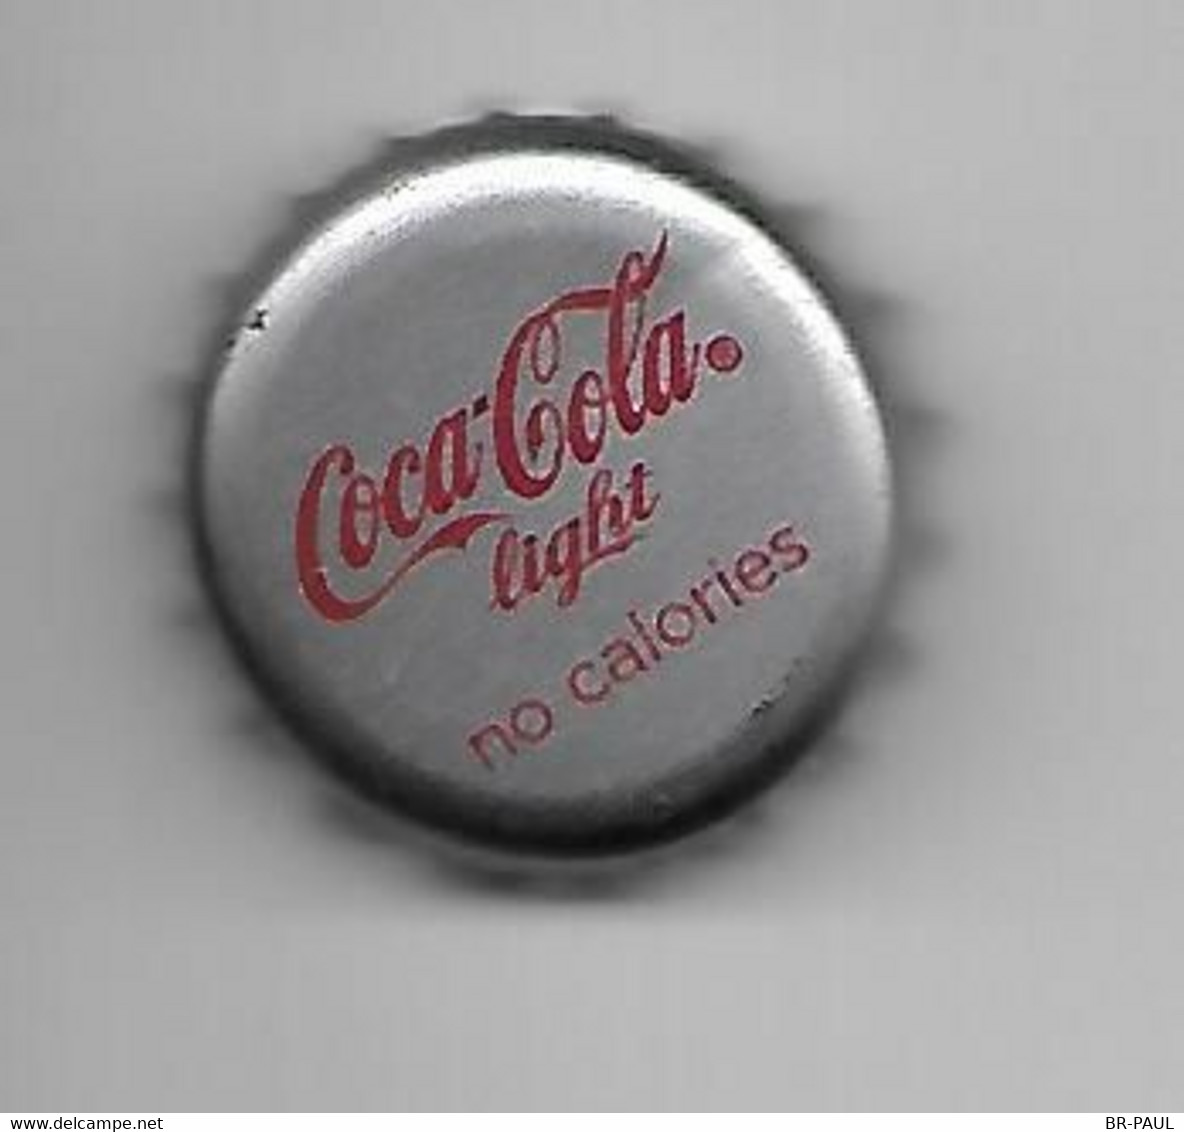 CAPSULE SODA / COCA COLA  / LIGHT NO CALORIES - Soda